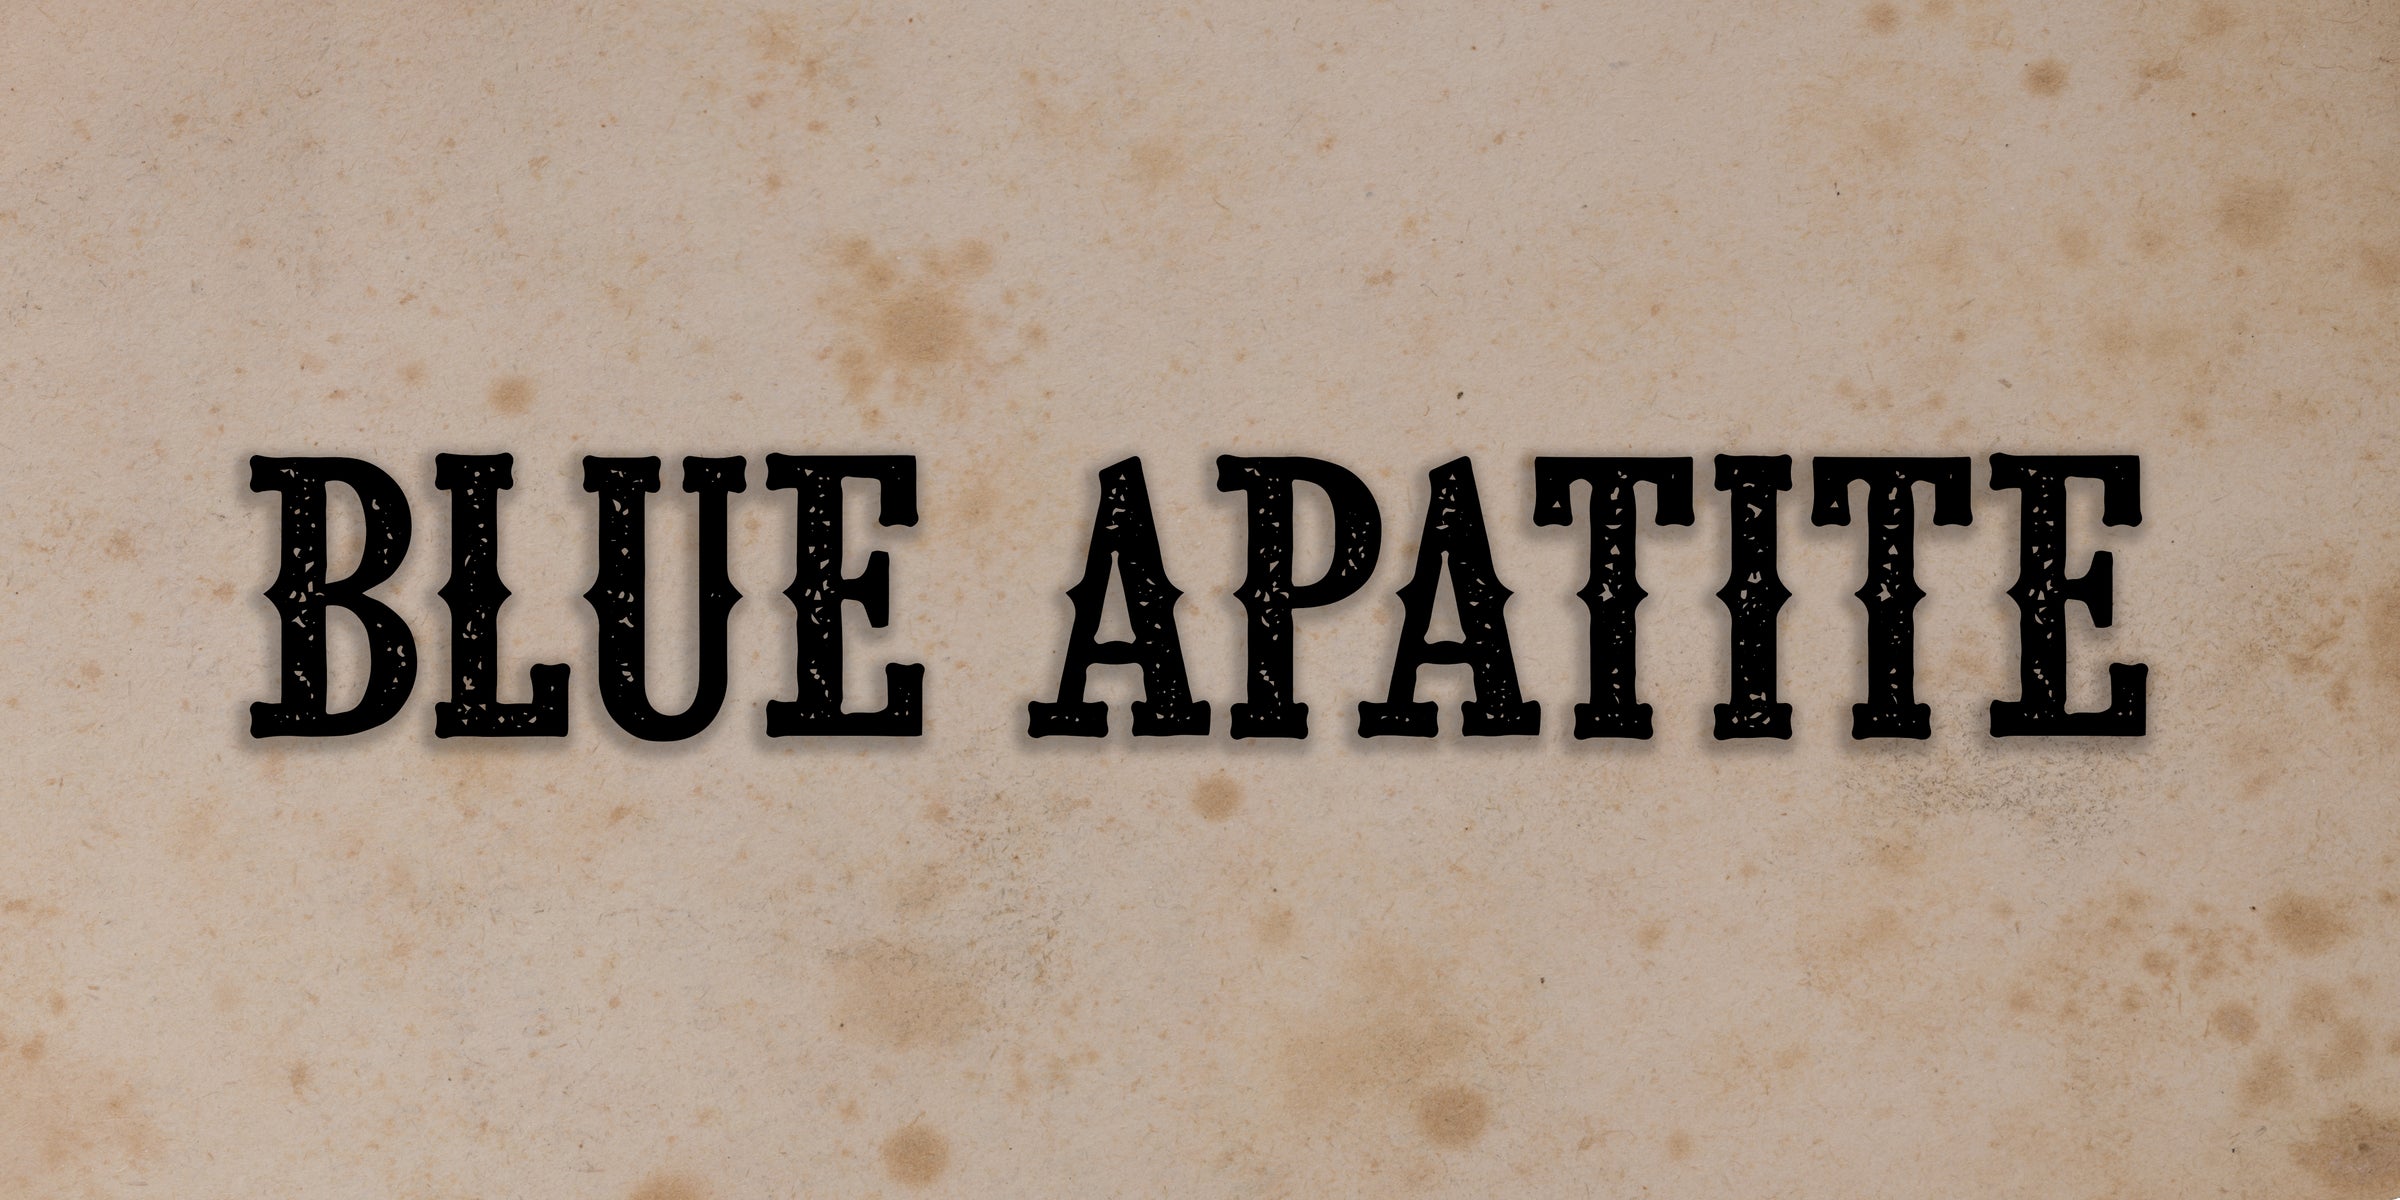 Blue Apatite